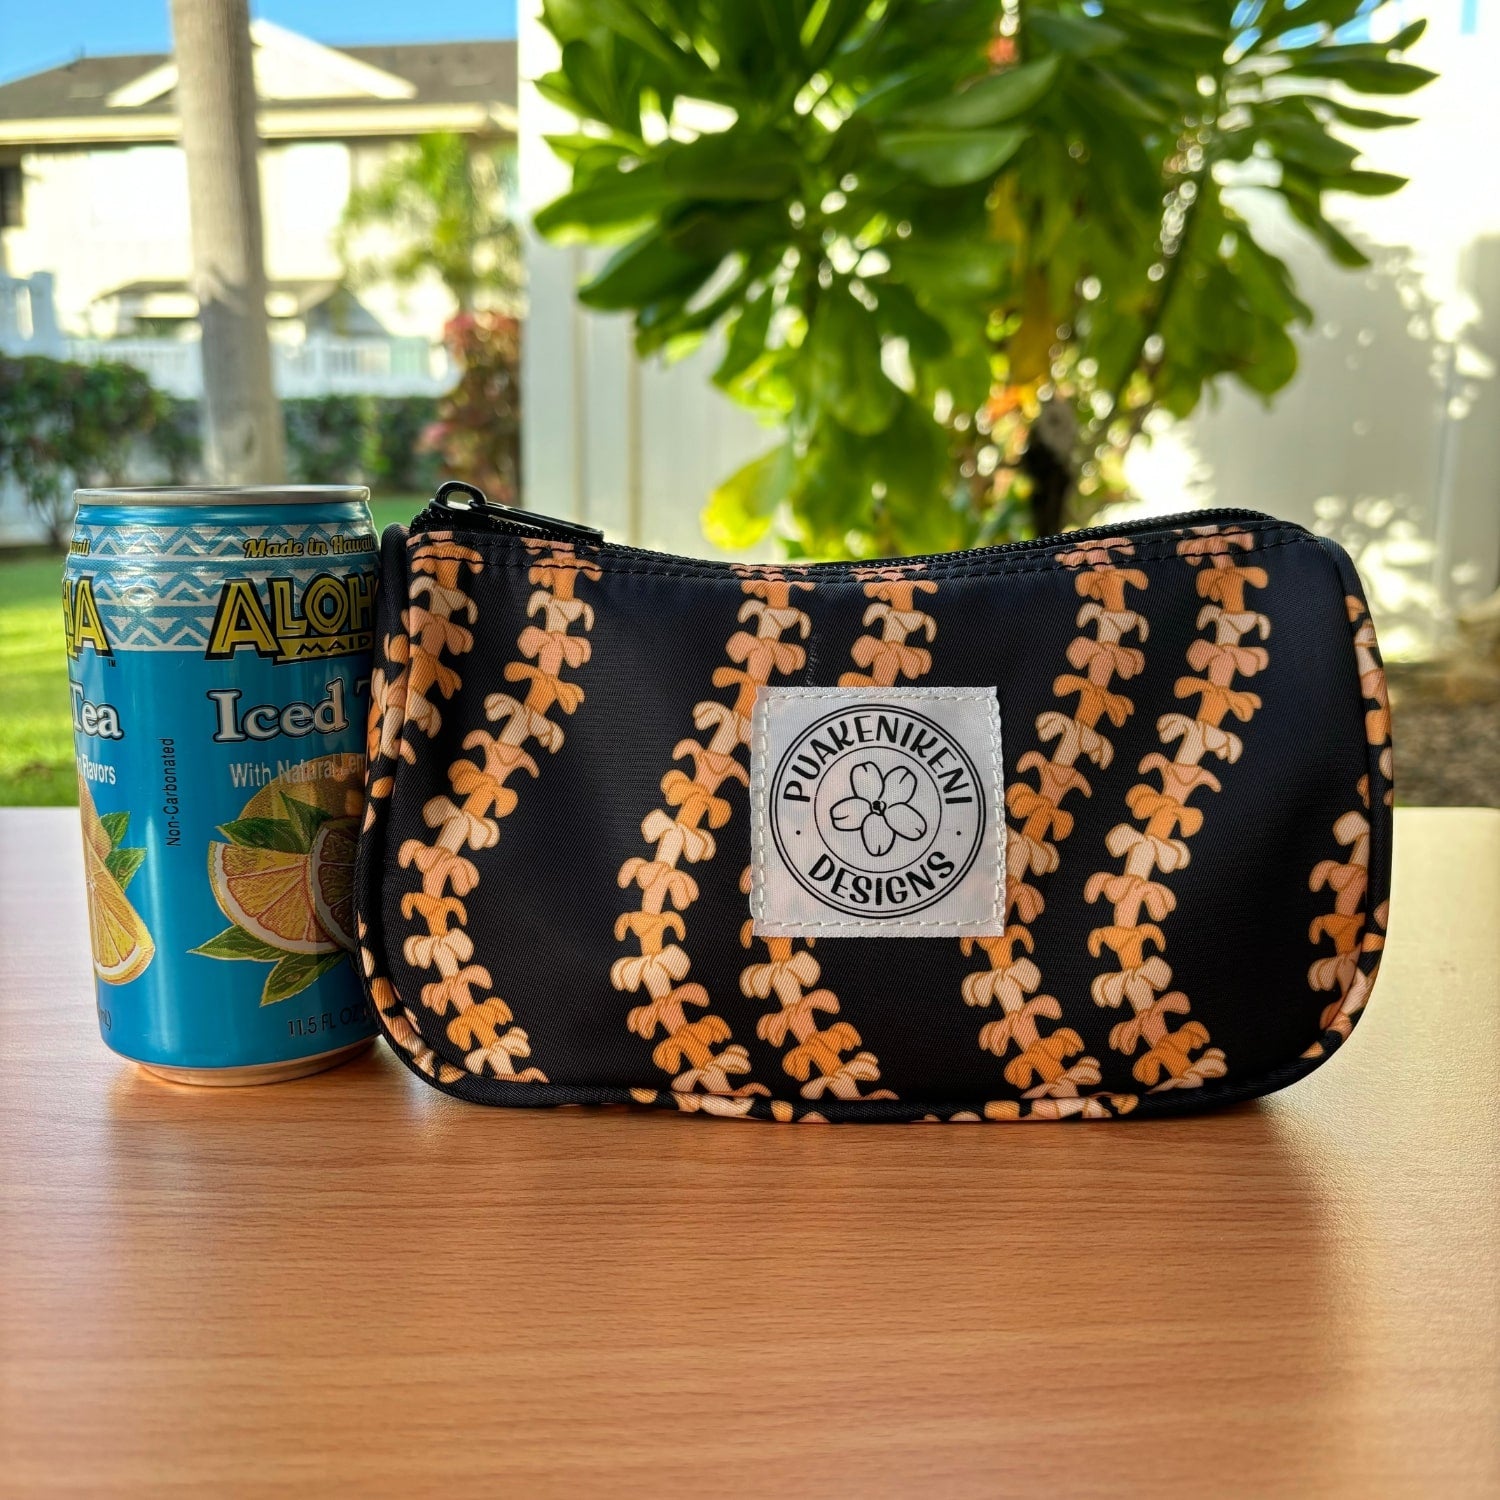 Mini Zipper Pouch - make-up bag, clutch, wristlet, with puakenikeni lei design from Puakenikeni Designs next to juice can